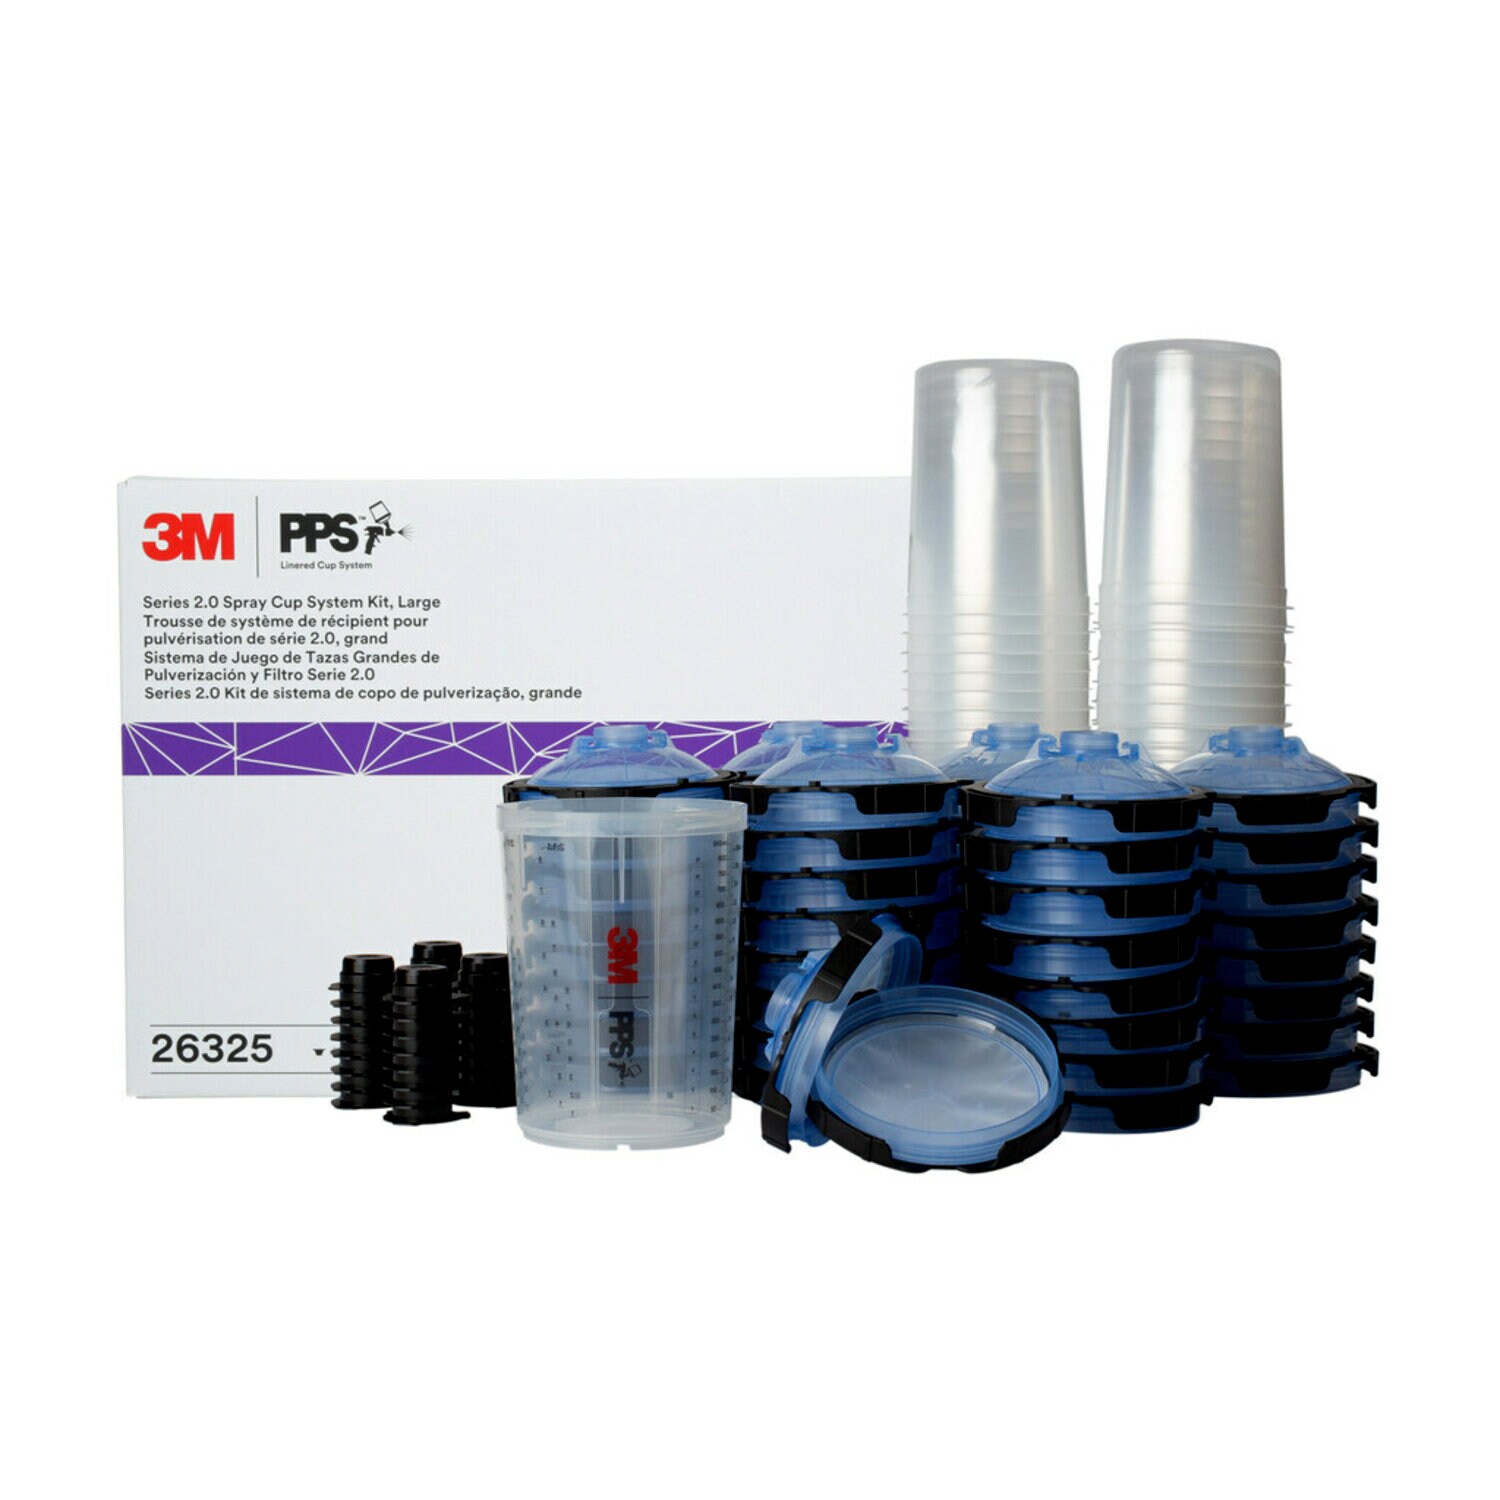 7100284561 - 3M PPS Series 2.0 Spray Cup System Kit 26325, Large (28 fl oz, 850
mL), 125 Micron Filter, 1 Kit/Case